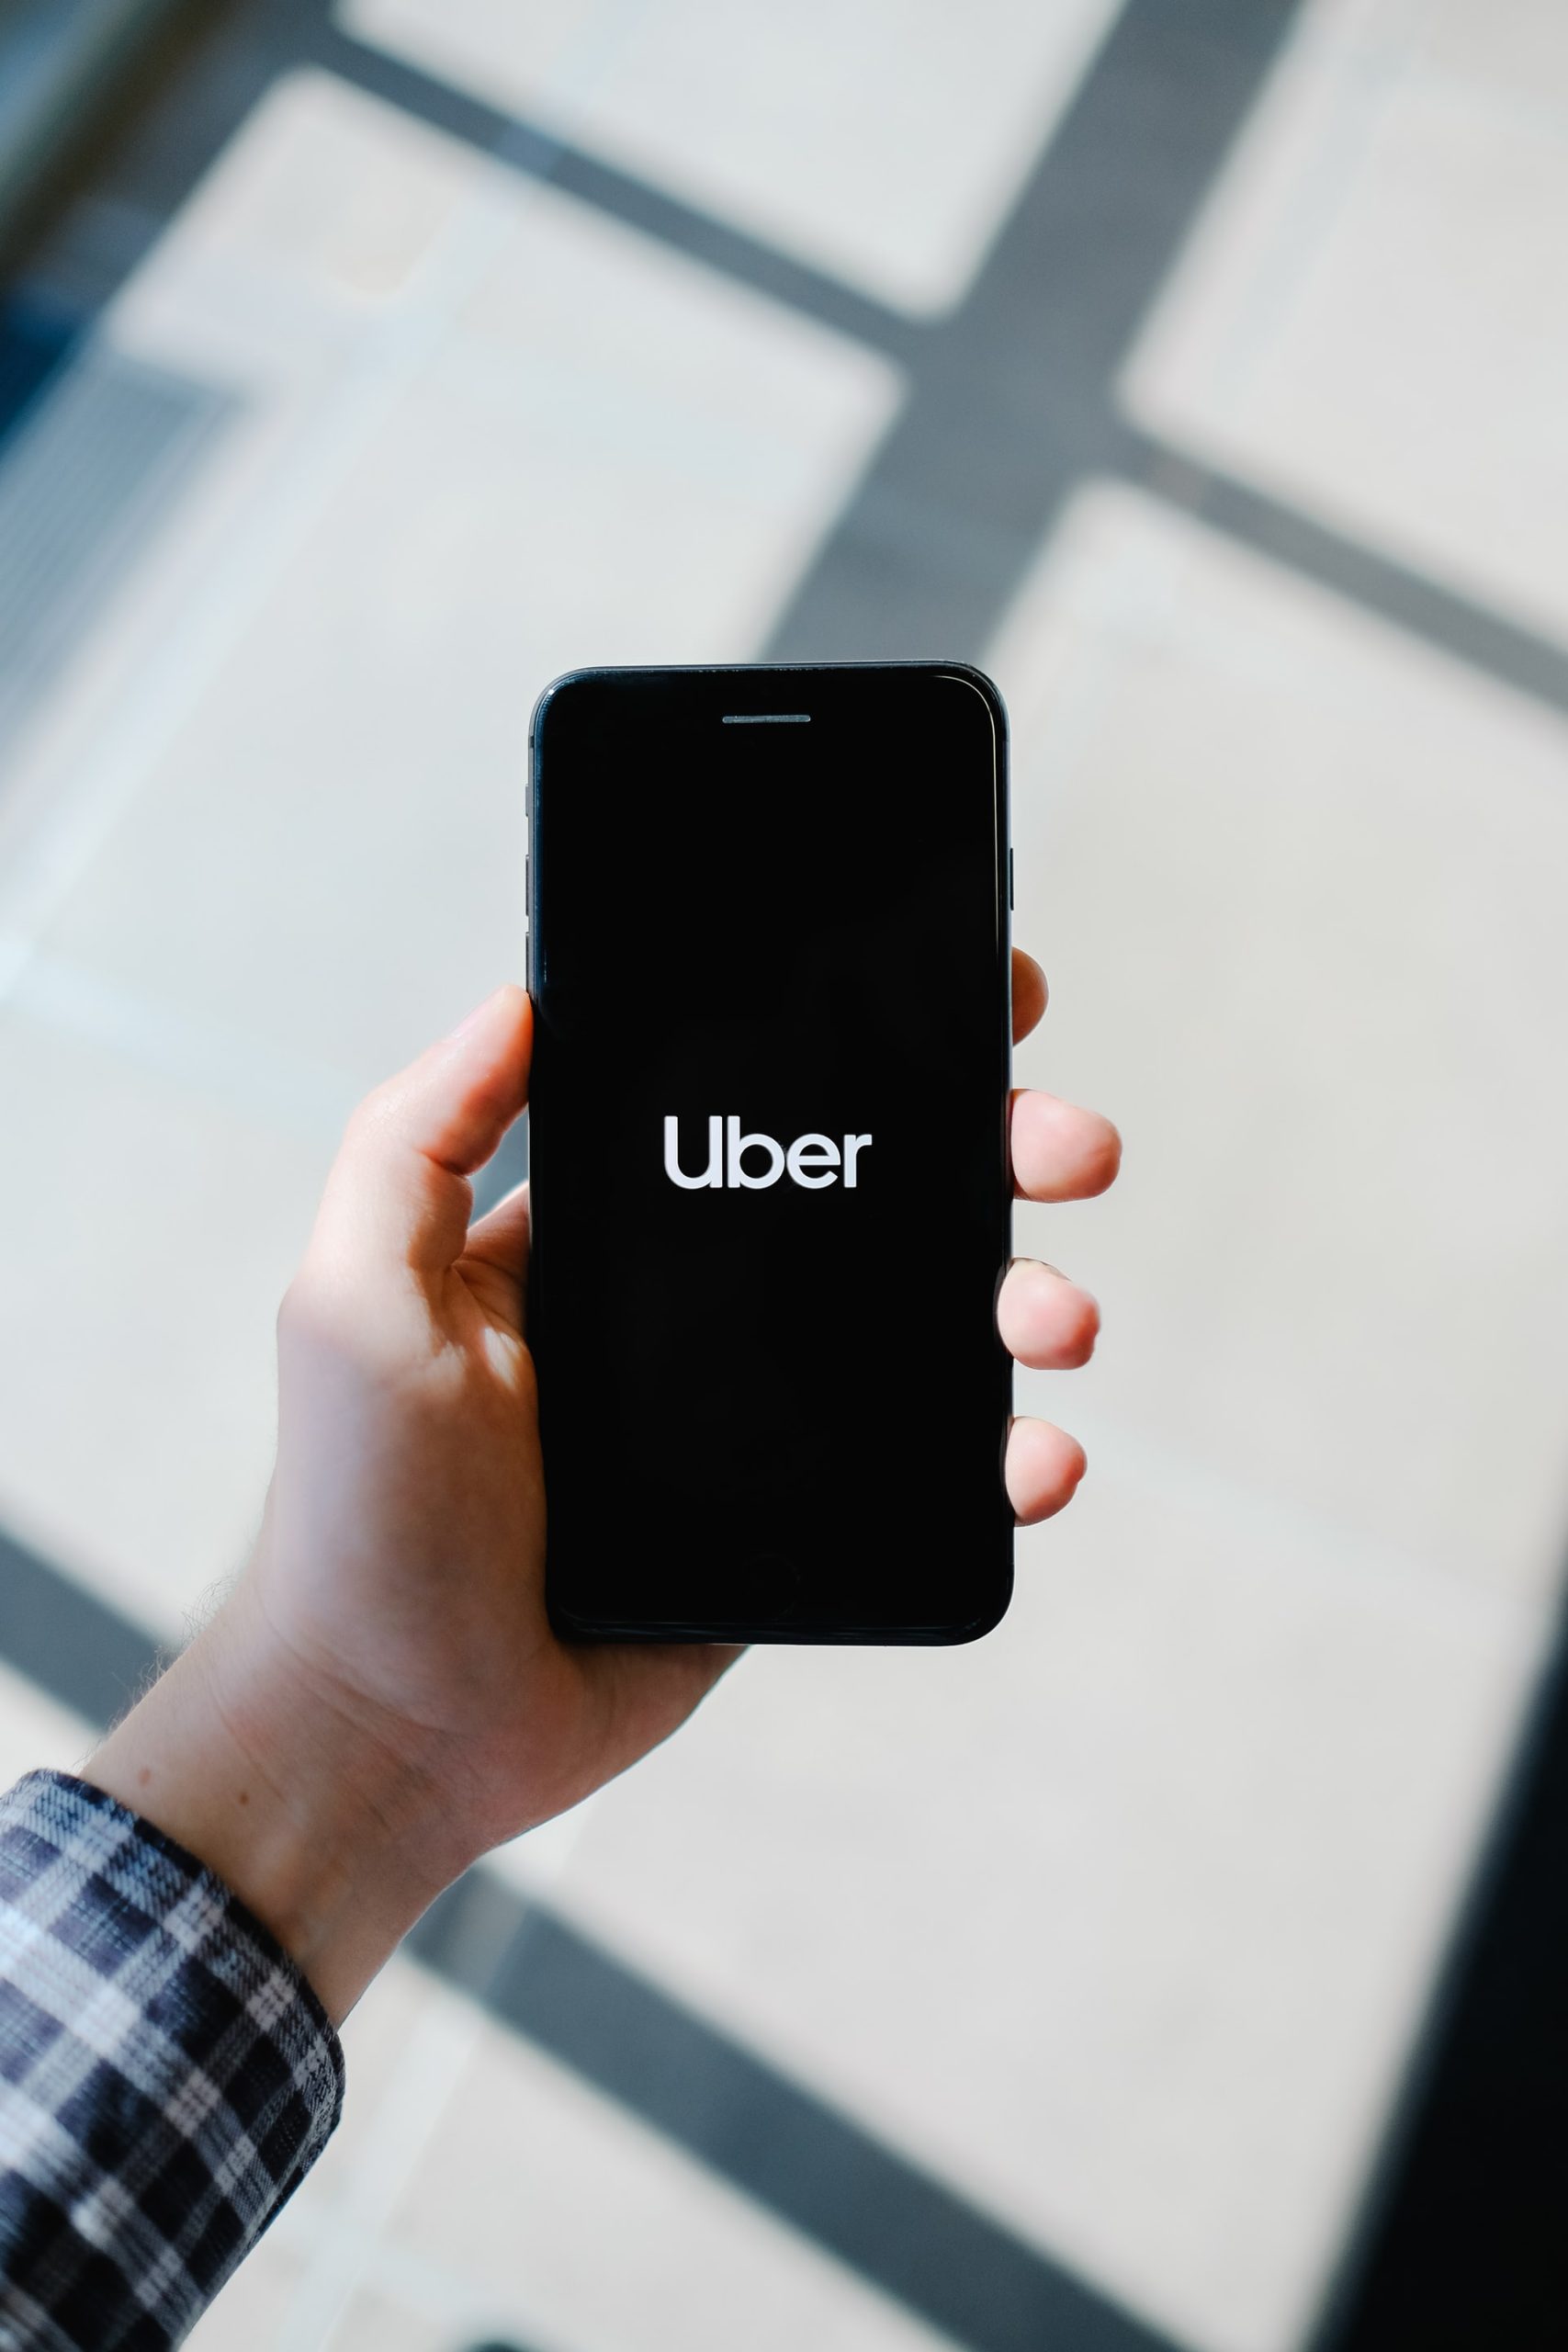 Uber logo on screen phone